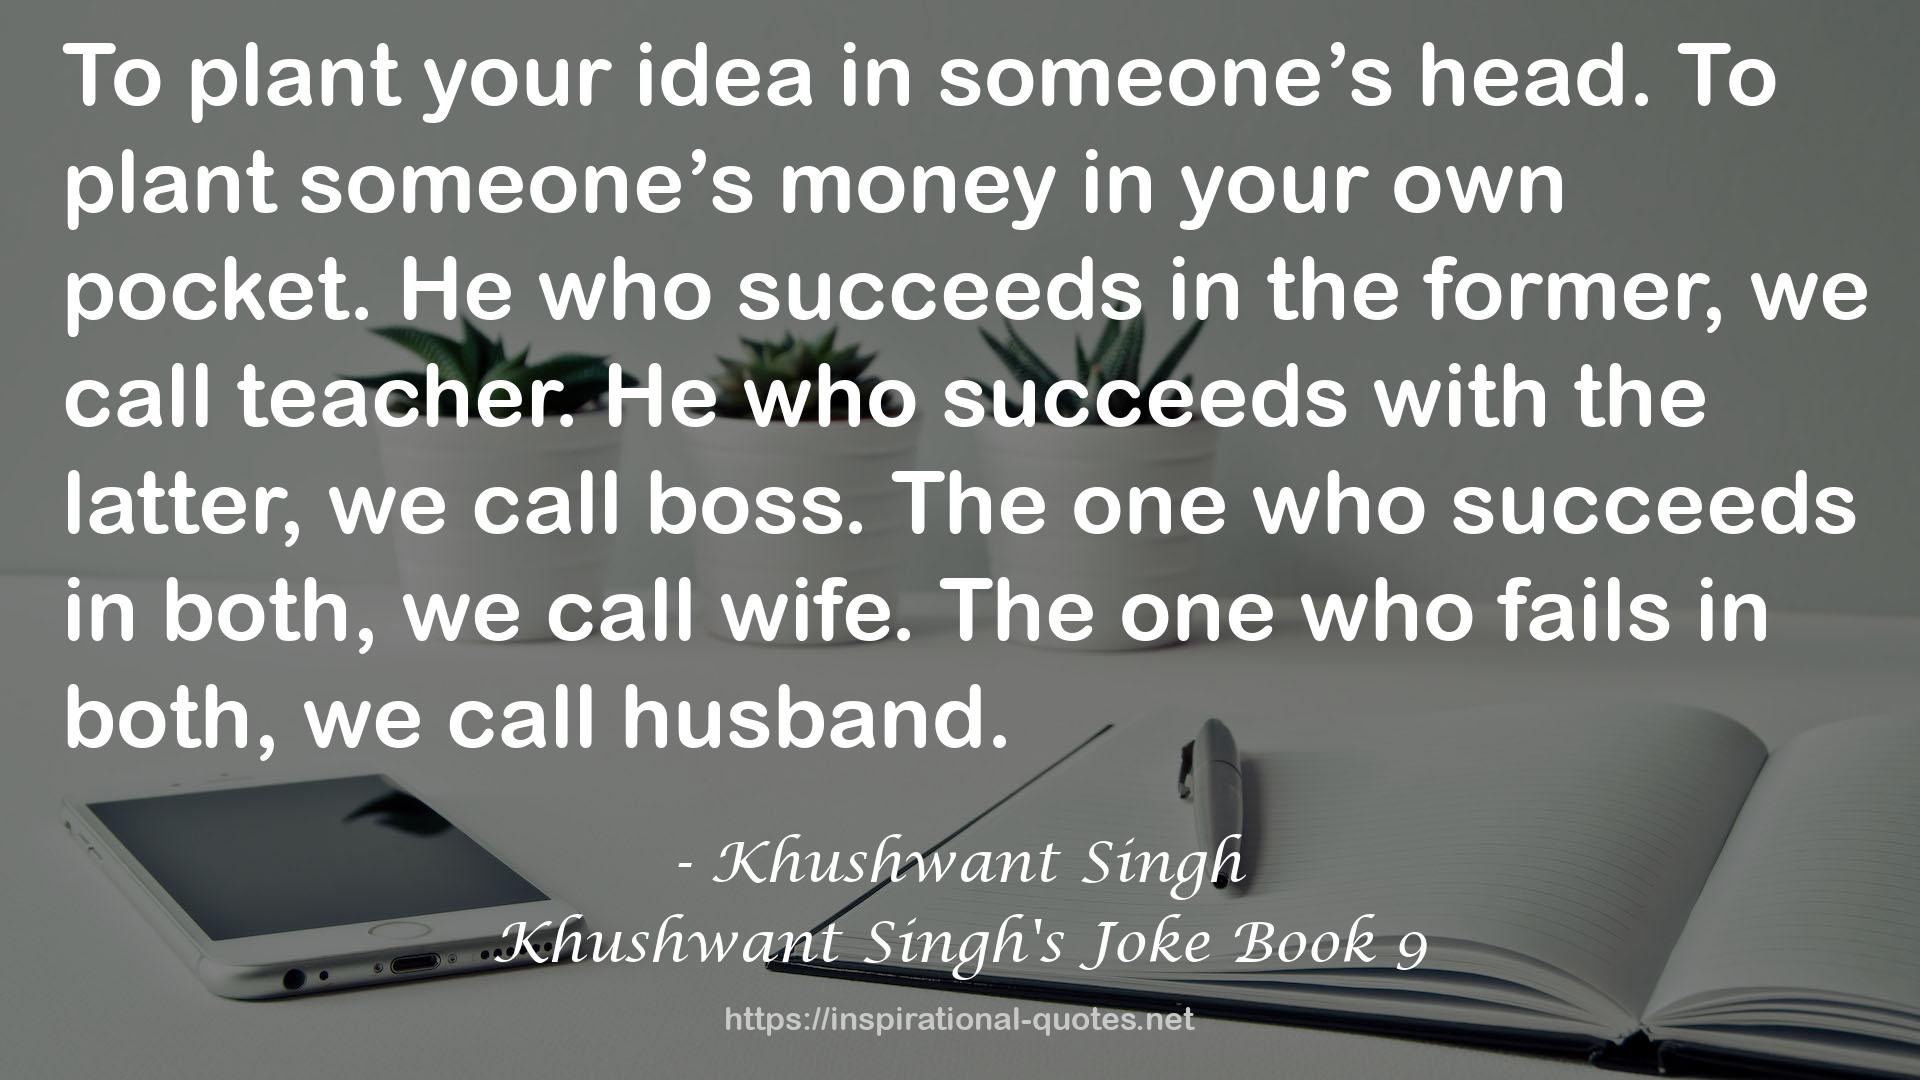 Khushwant Singh's Joke Book 9 QUOTES